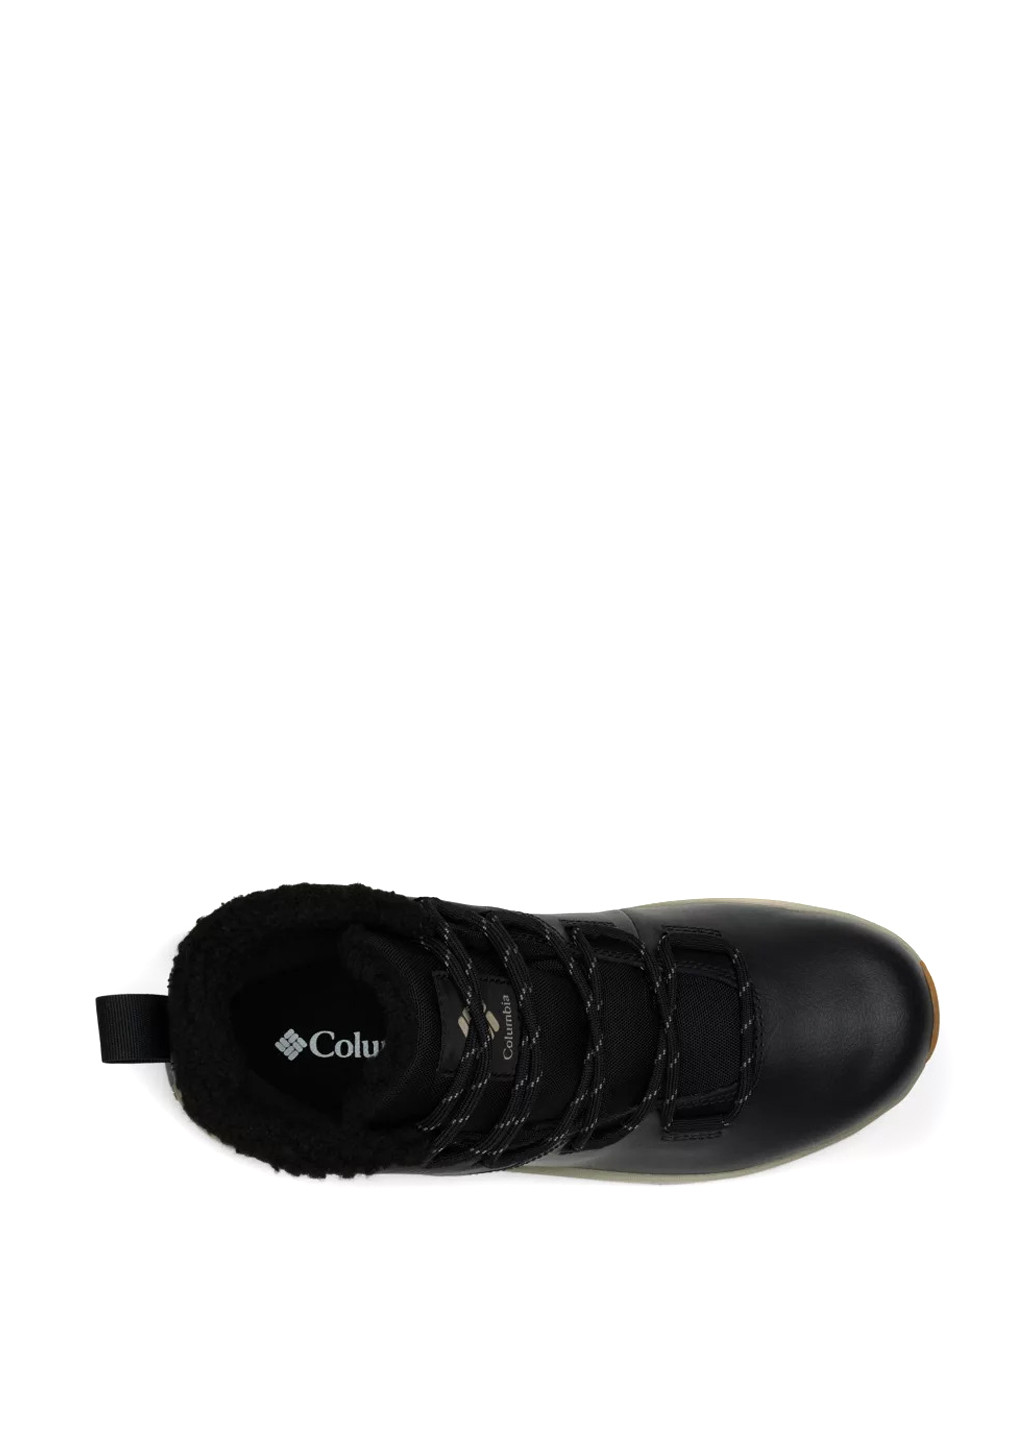 Зимние ботинки Columbia с логотипом, с тиснением тканевые